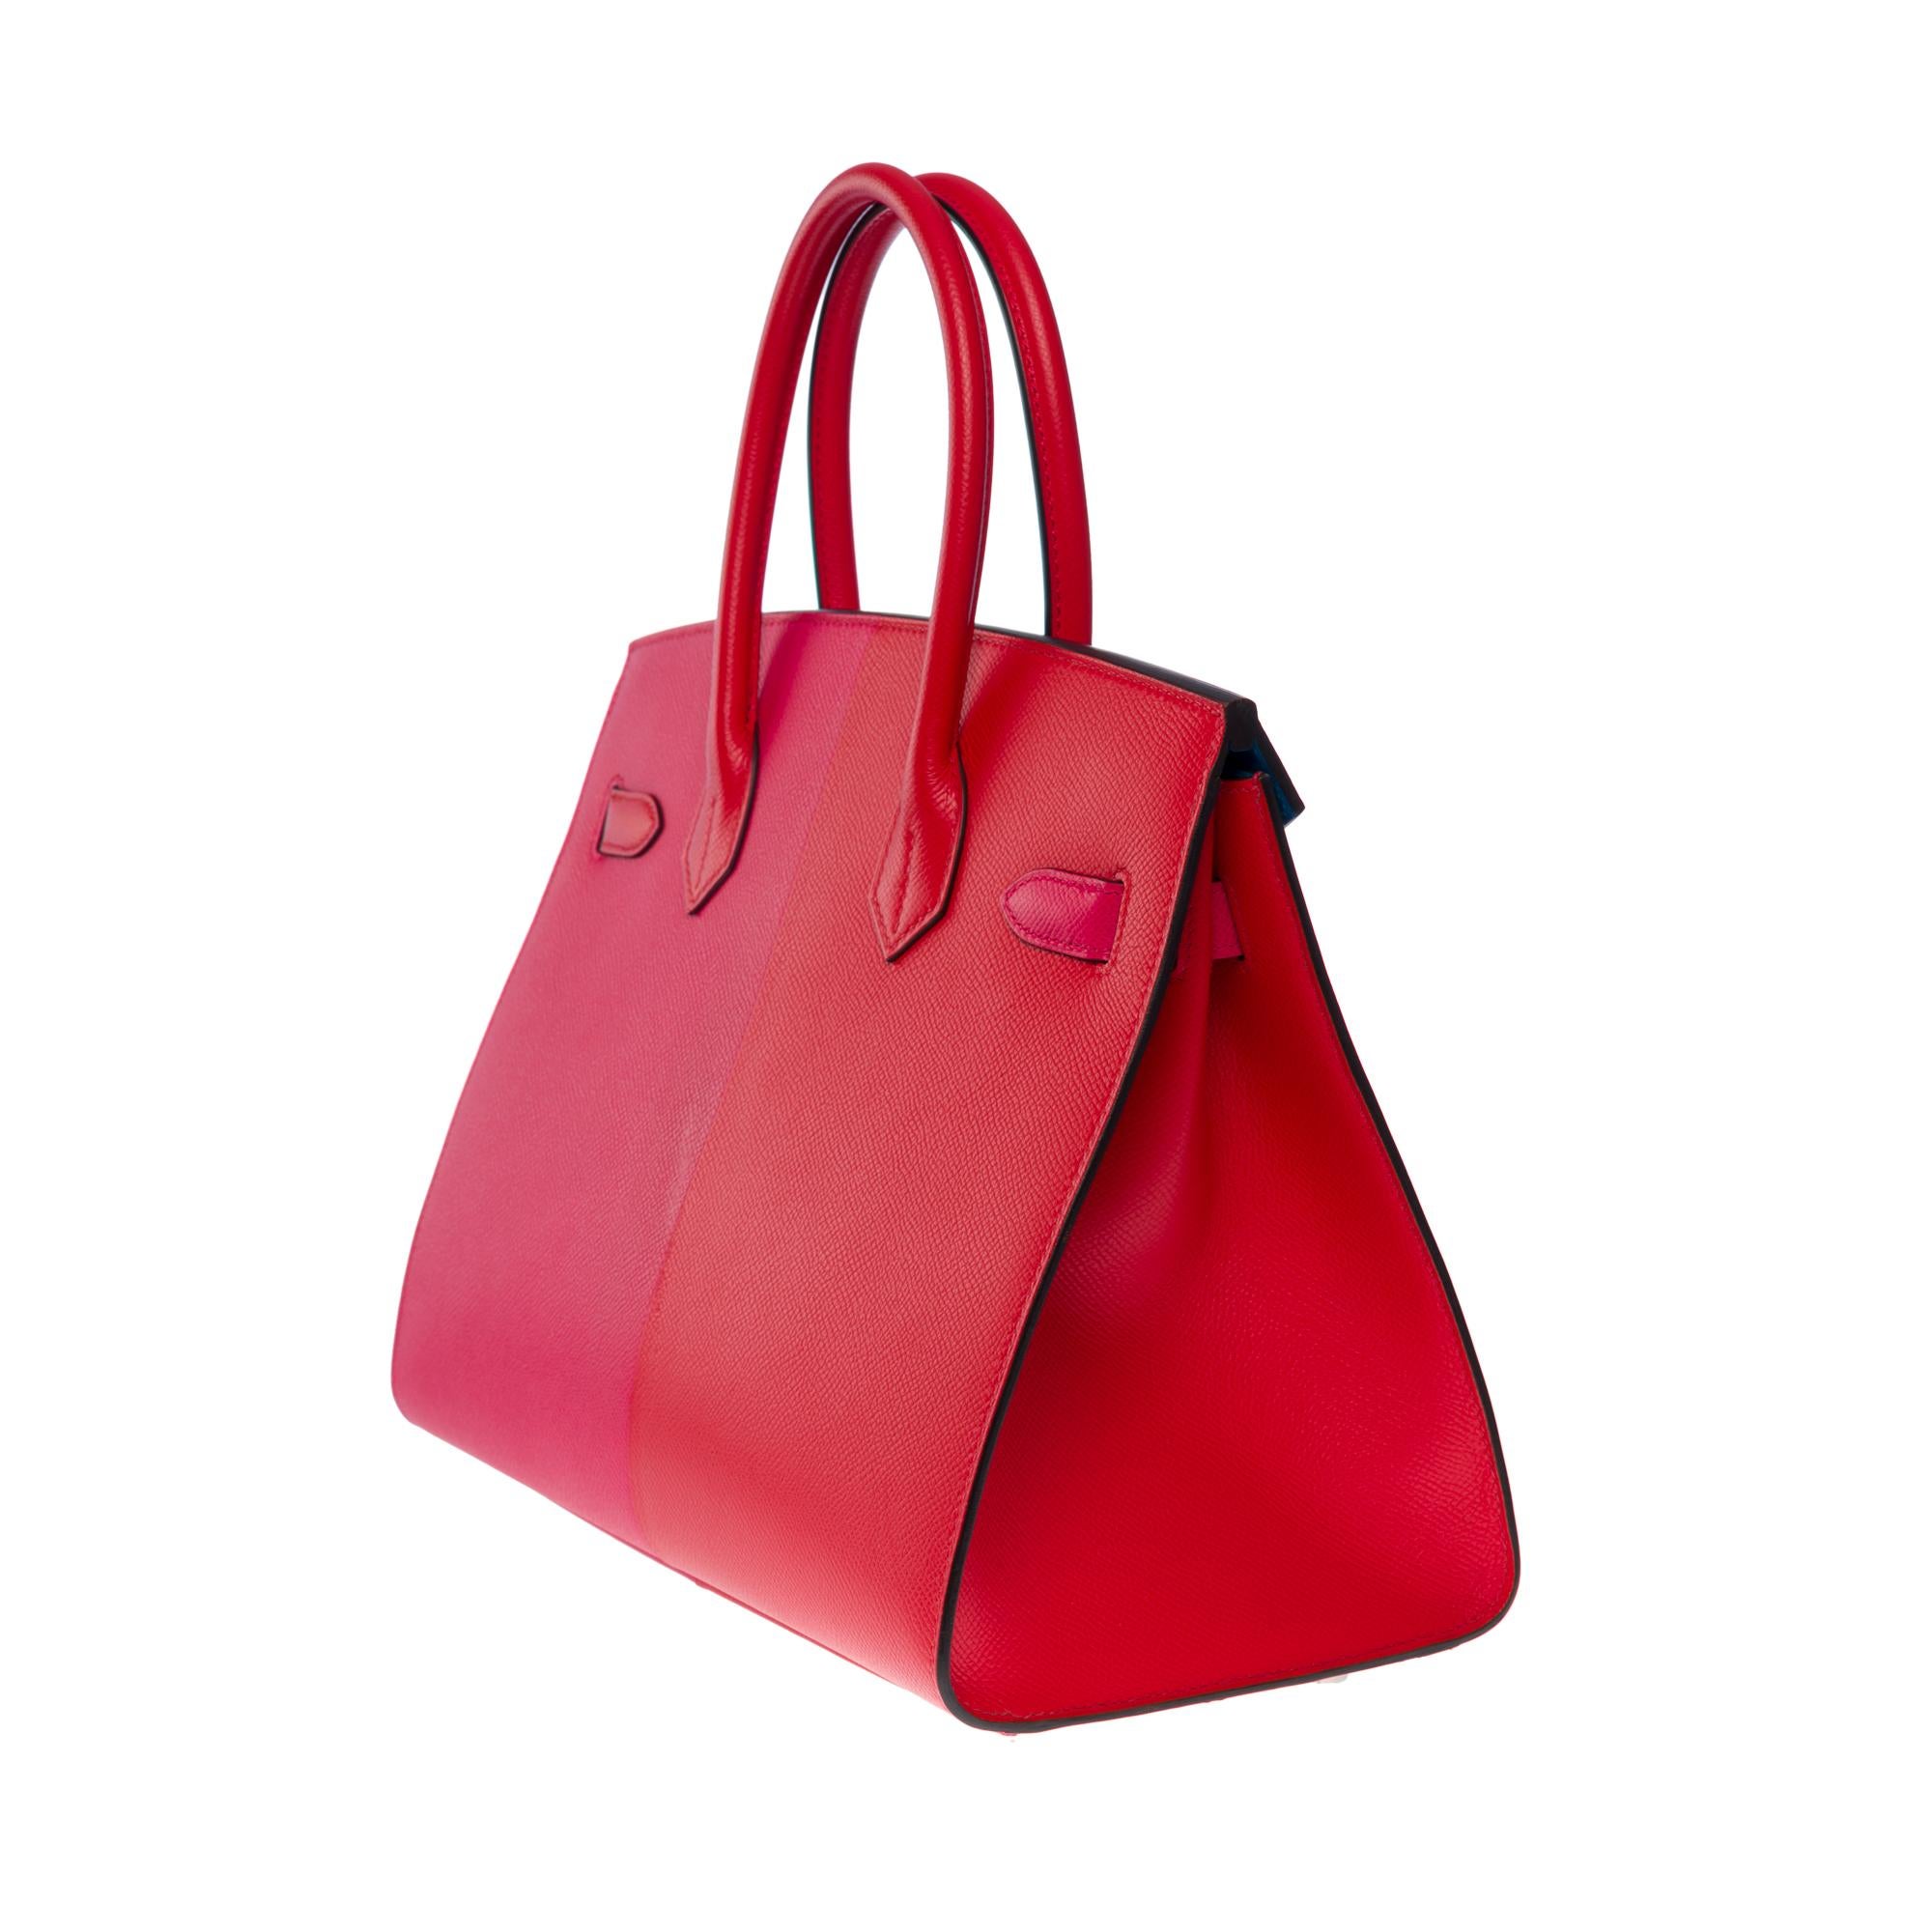 New Hermès Kazak  Birkin 30 handbag in Red/Pink Epsom leather, SHW For Sale 1